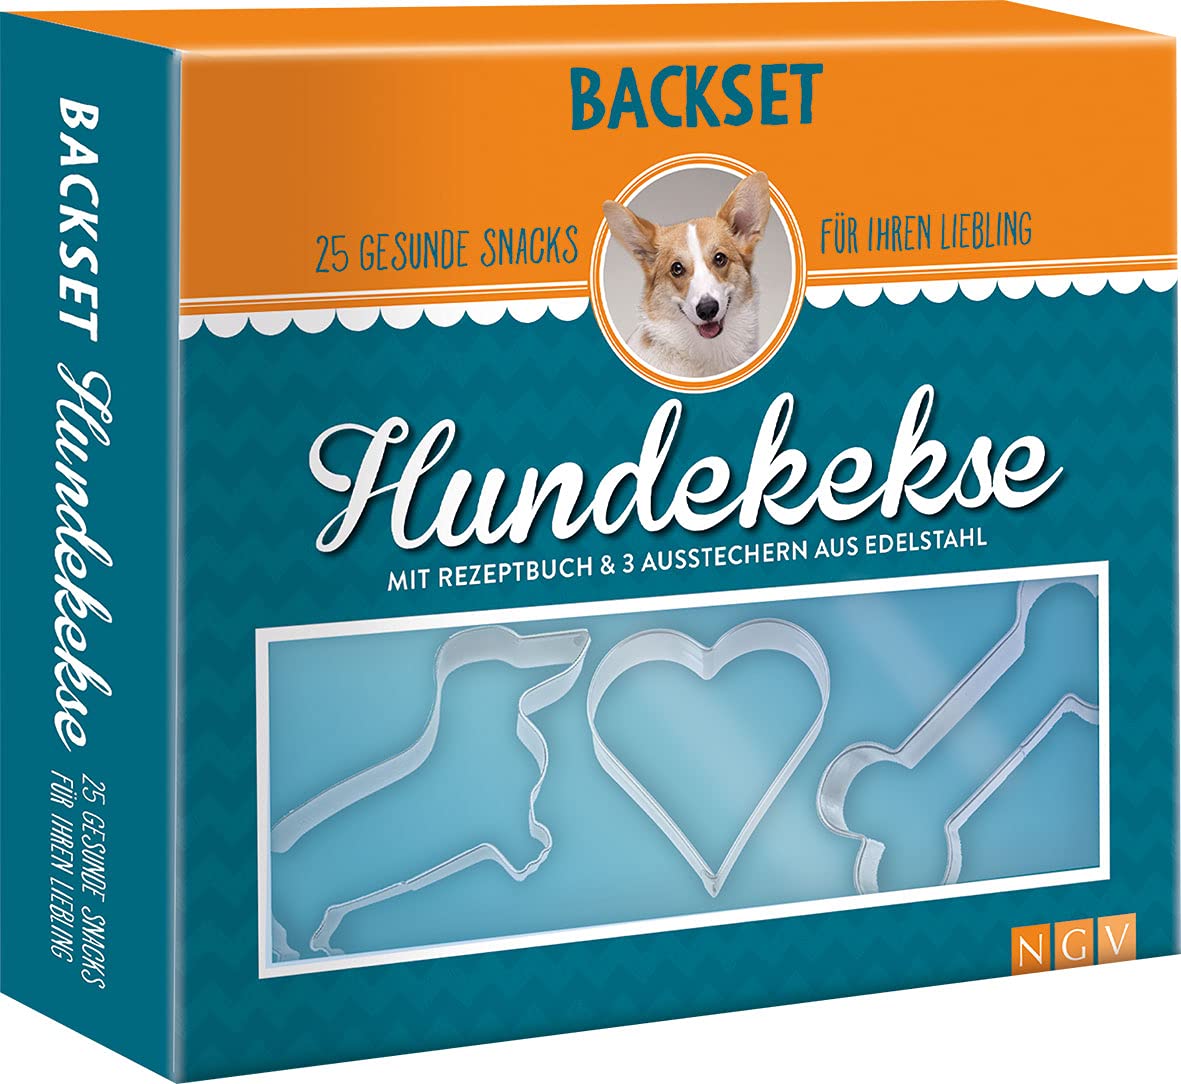 Backset Hundekekse: Buch + 3 Ausstecher aus Edelstahl [Hrsg. Naumann & Göbel]